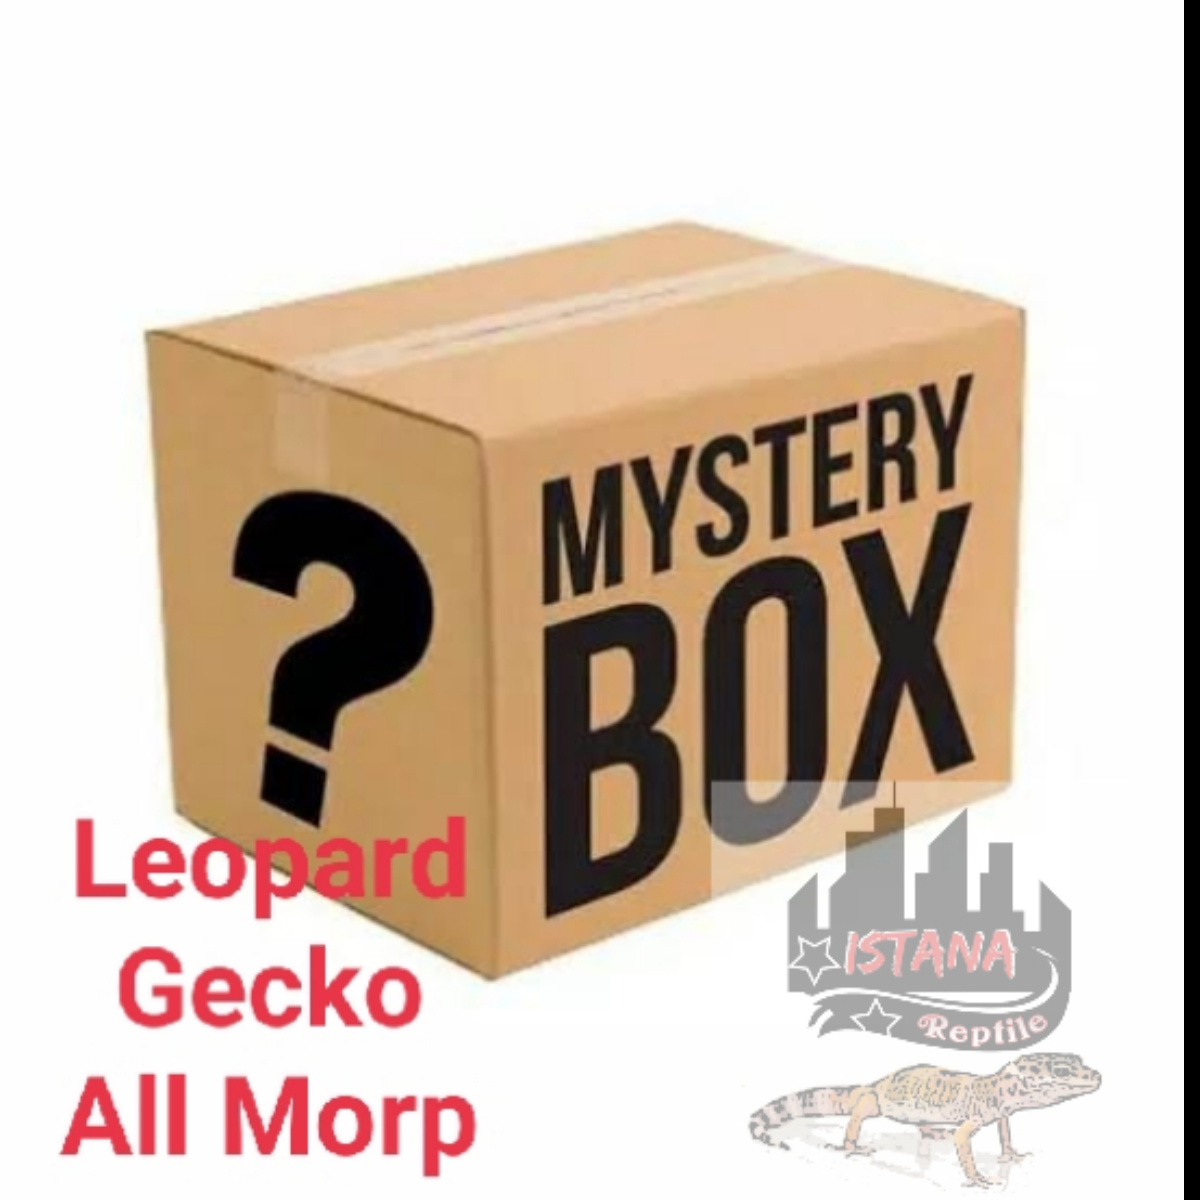 Mystery box Leopard gecko